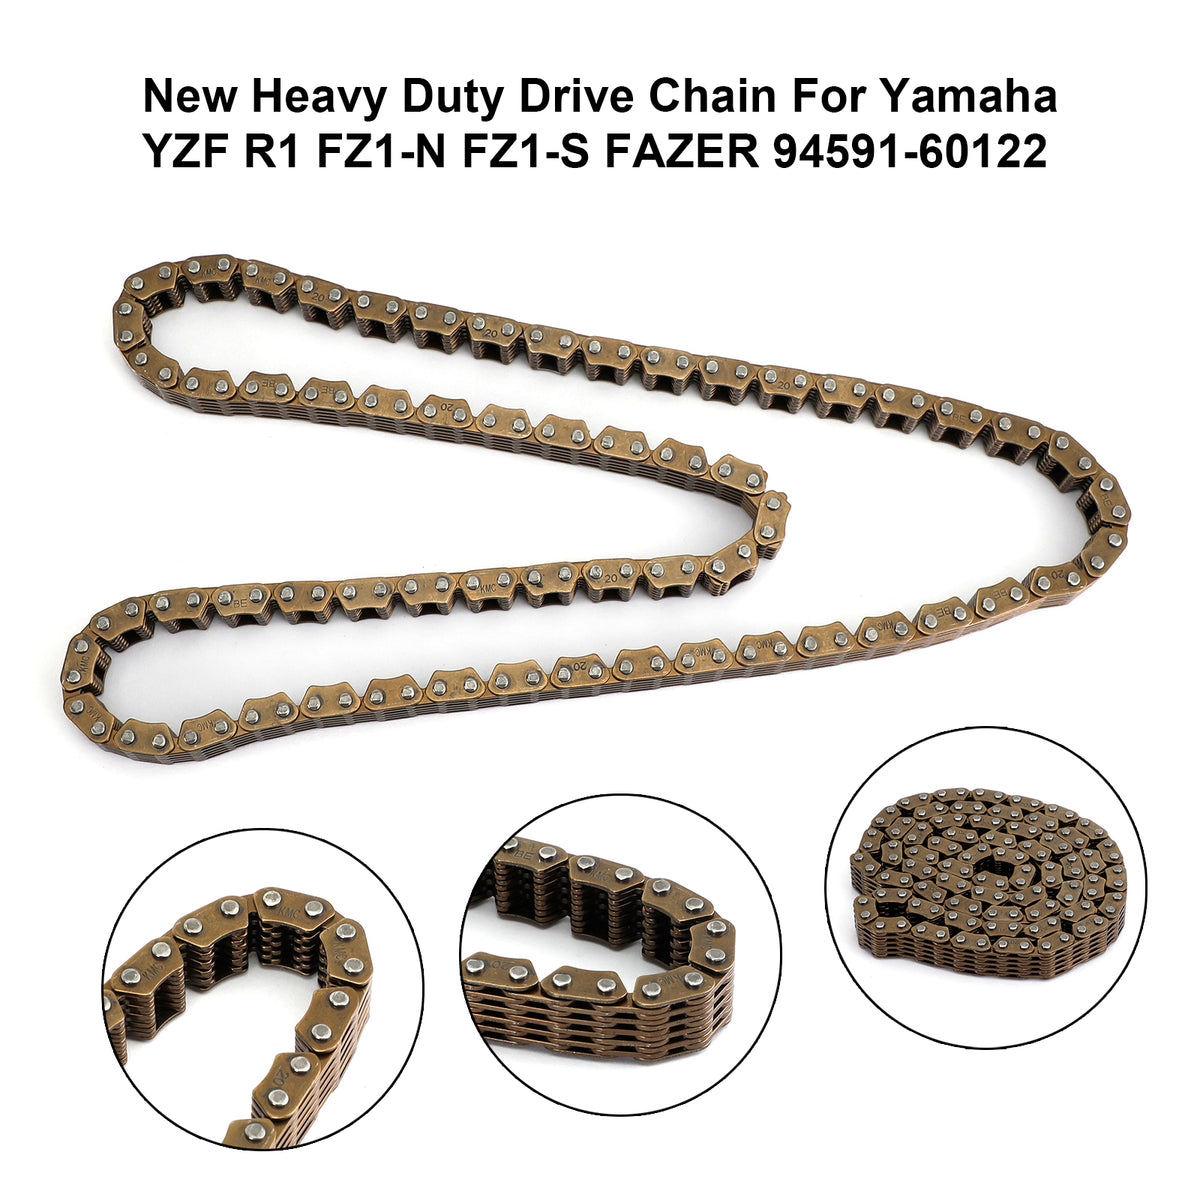 New Heavy Duty Drive Chain For Yamaha Yzf R1 Fz1-N Fz1-S Fazer 94591-60122 Generic